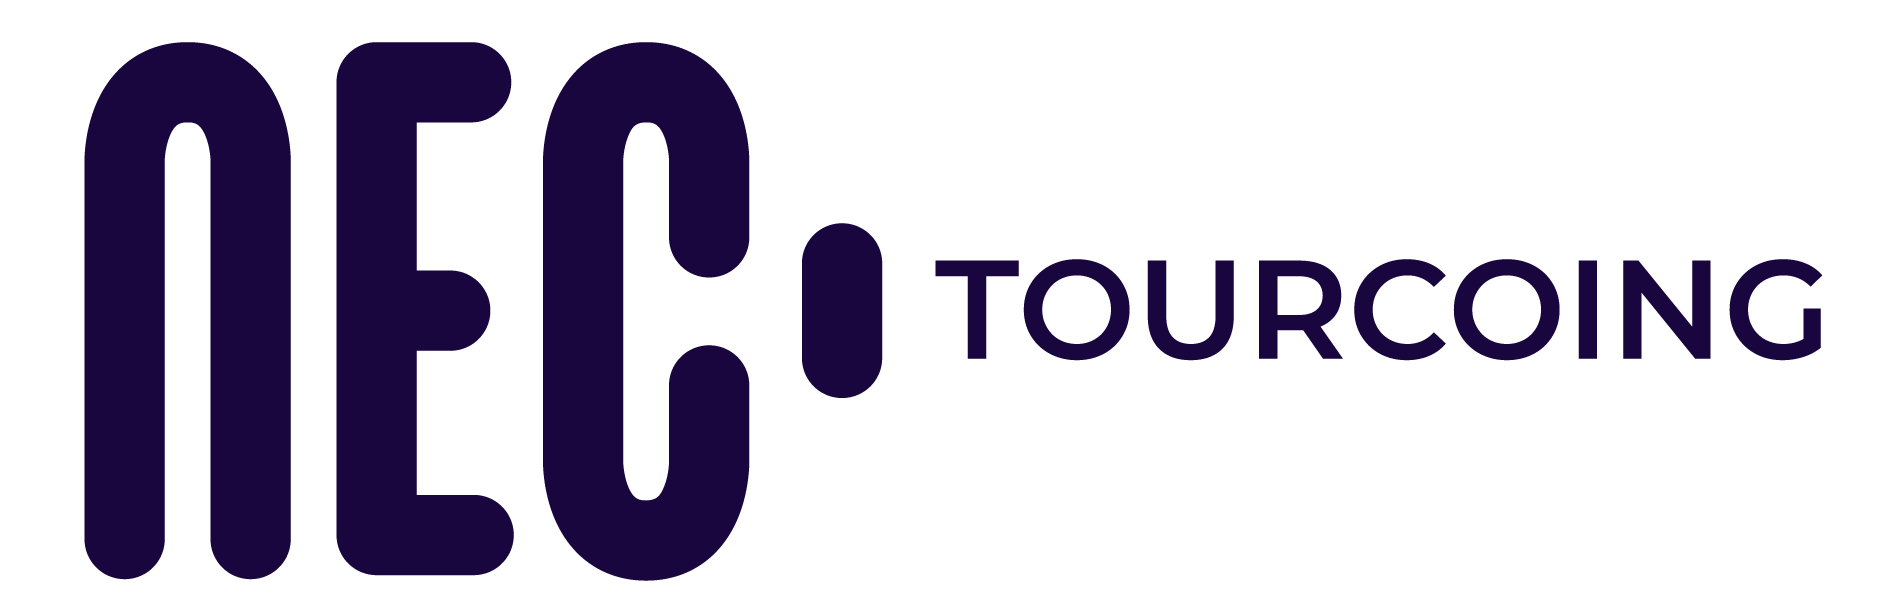 logo-nec-tourcoing-dark(1)